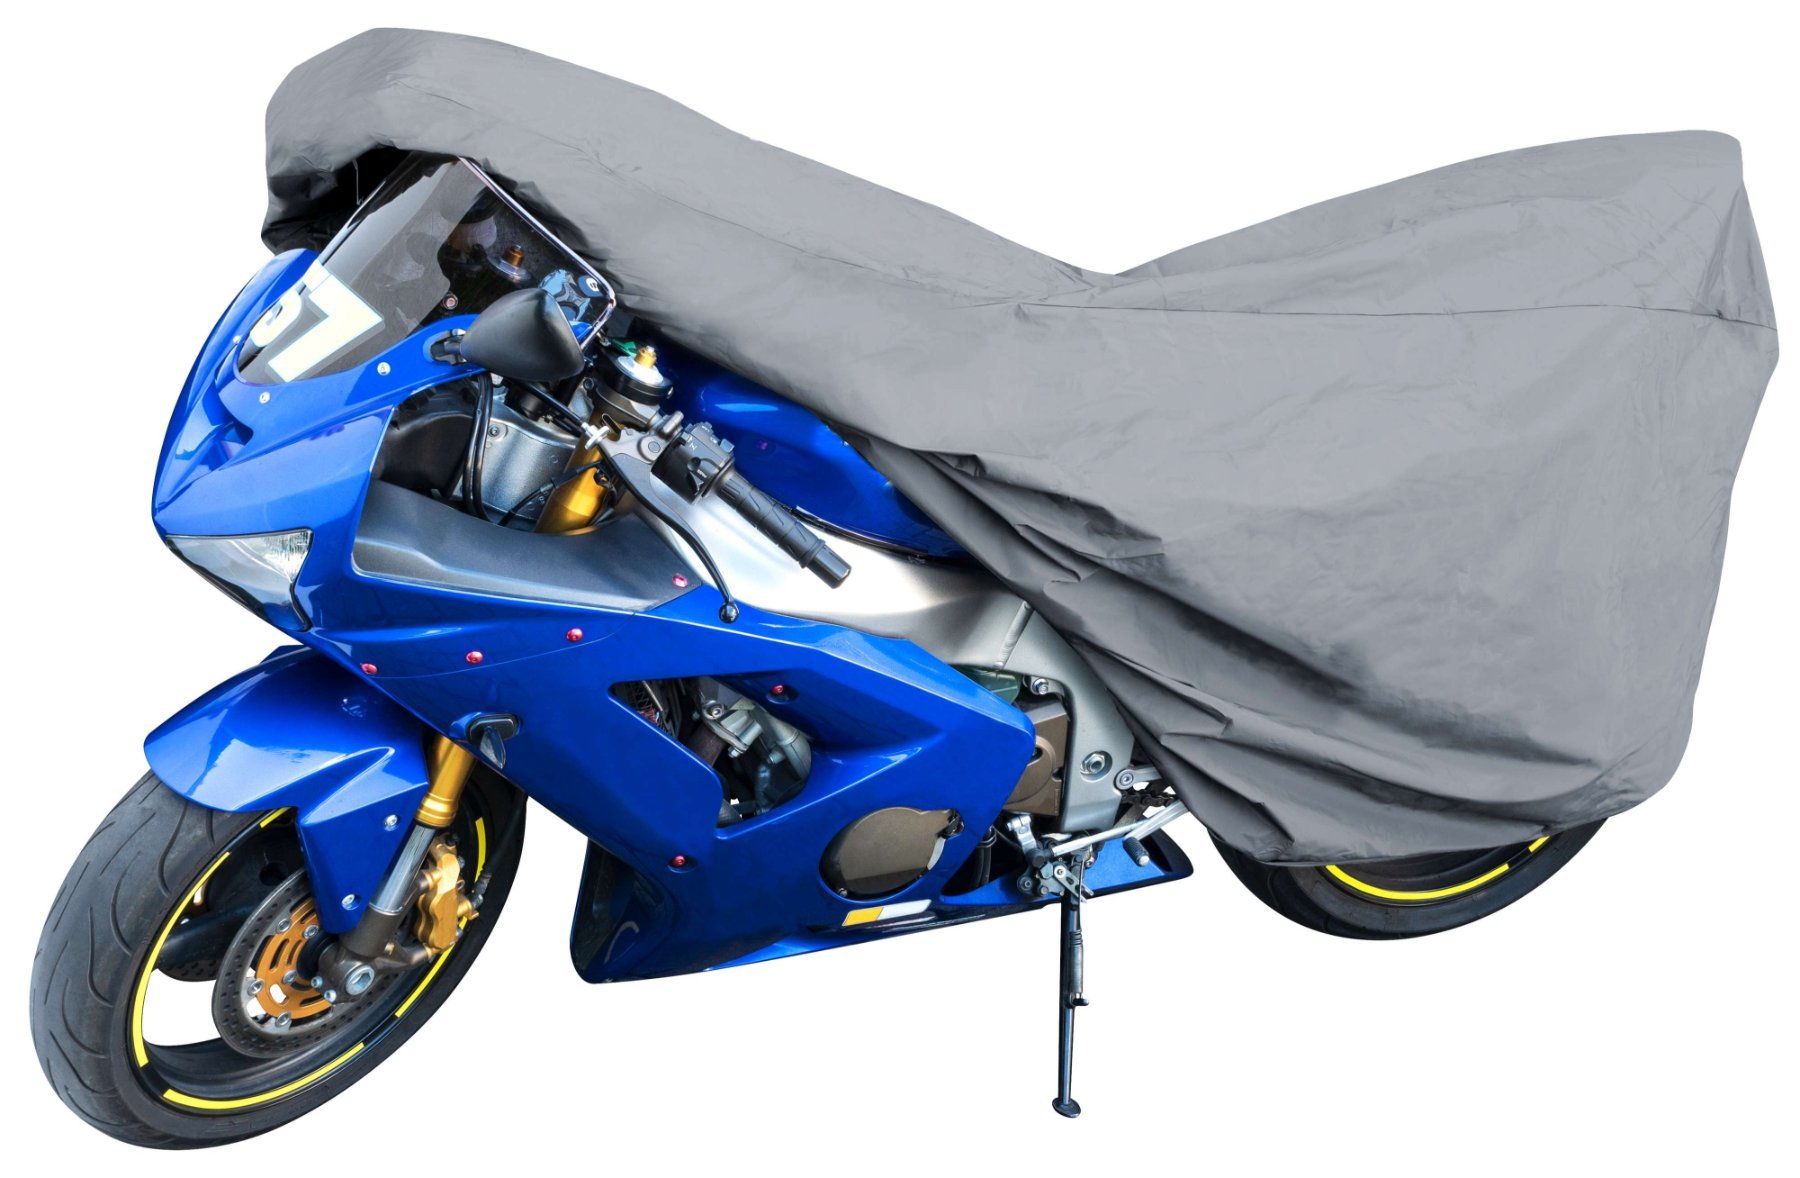 Motorcycle garage Sport size M PVC - 215 x 95 x 120 cm grey